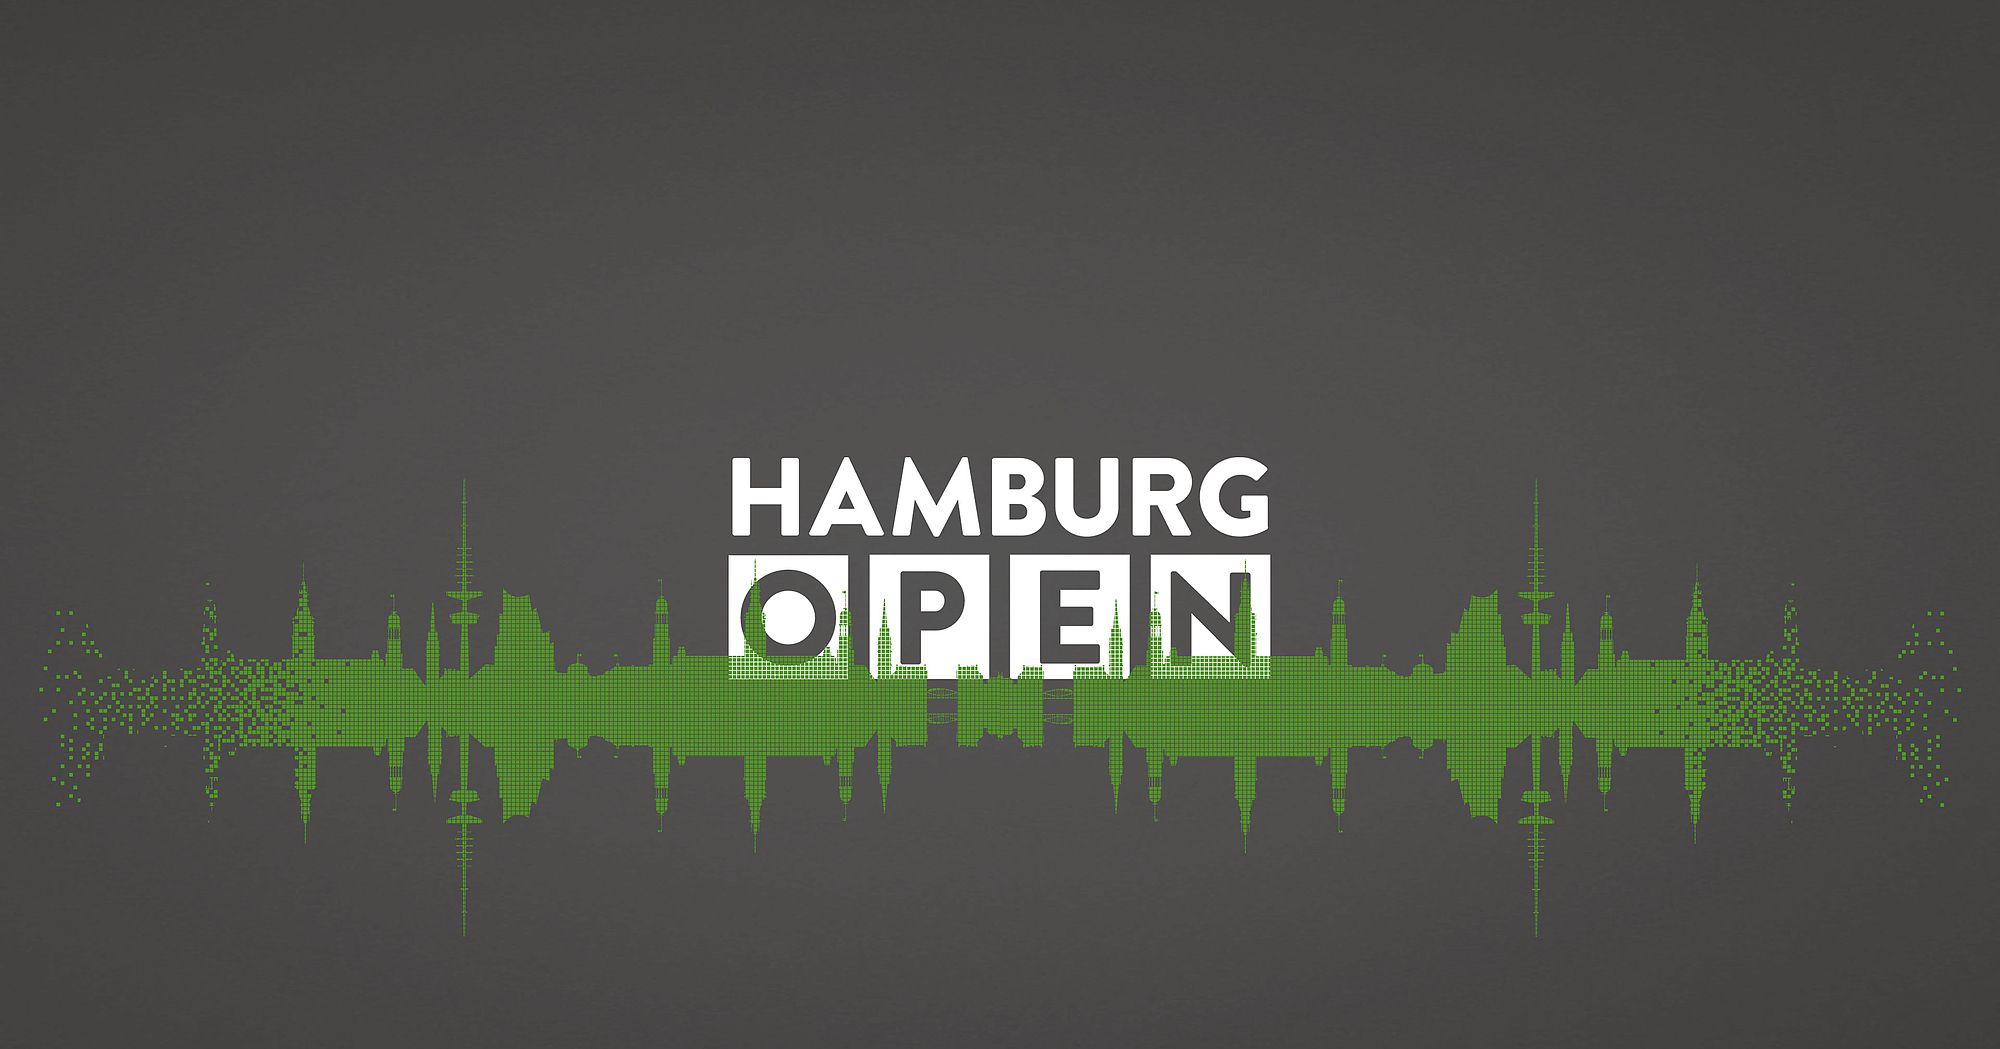 (c) Hamburg-open.de